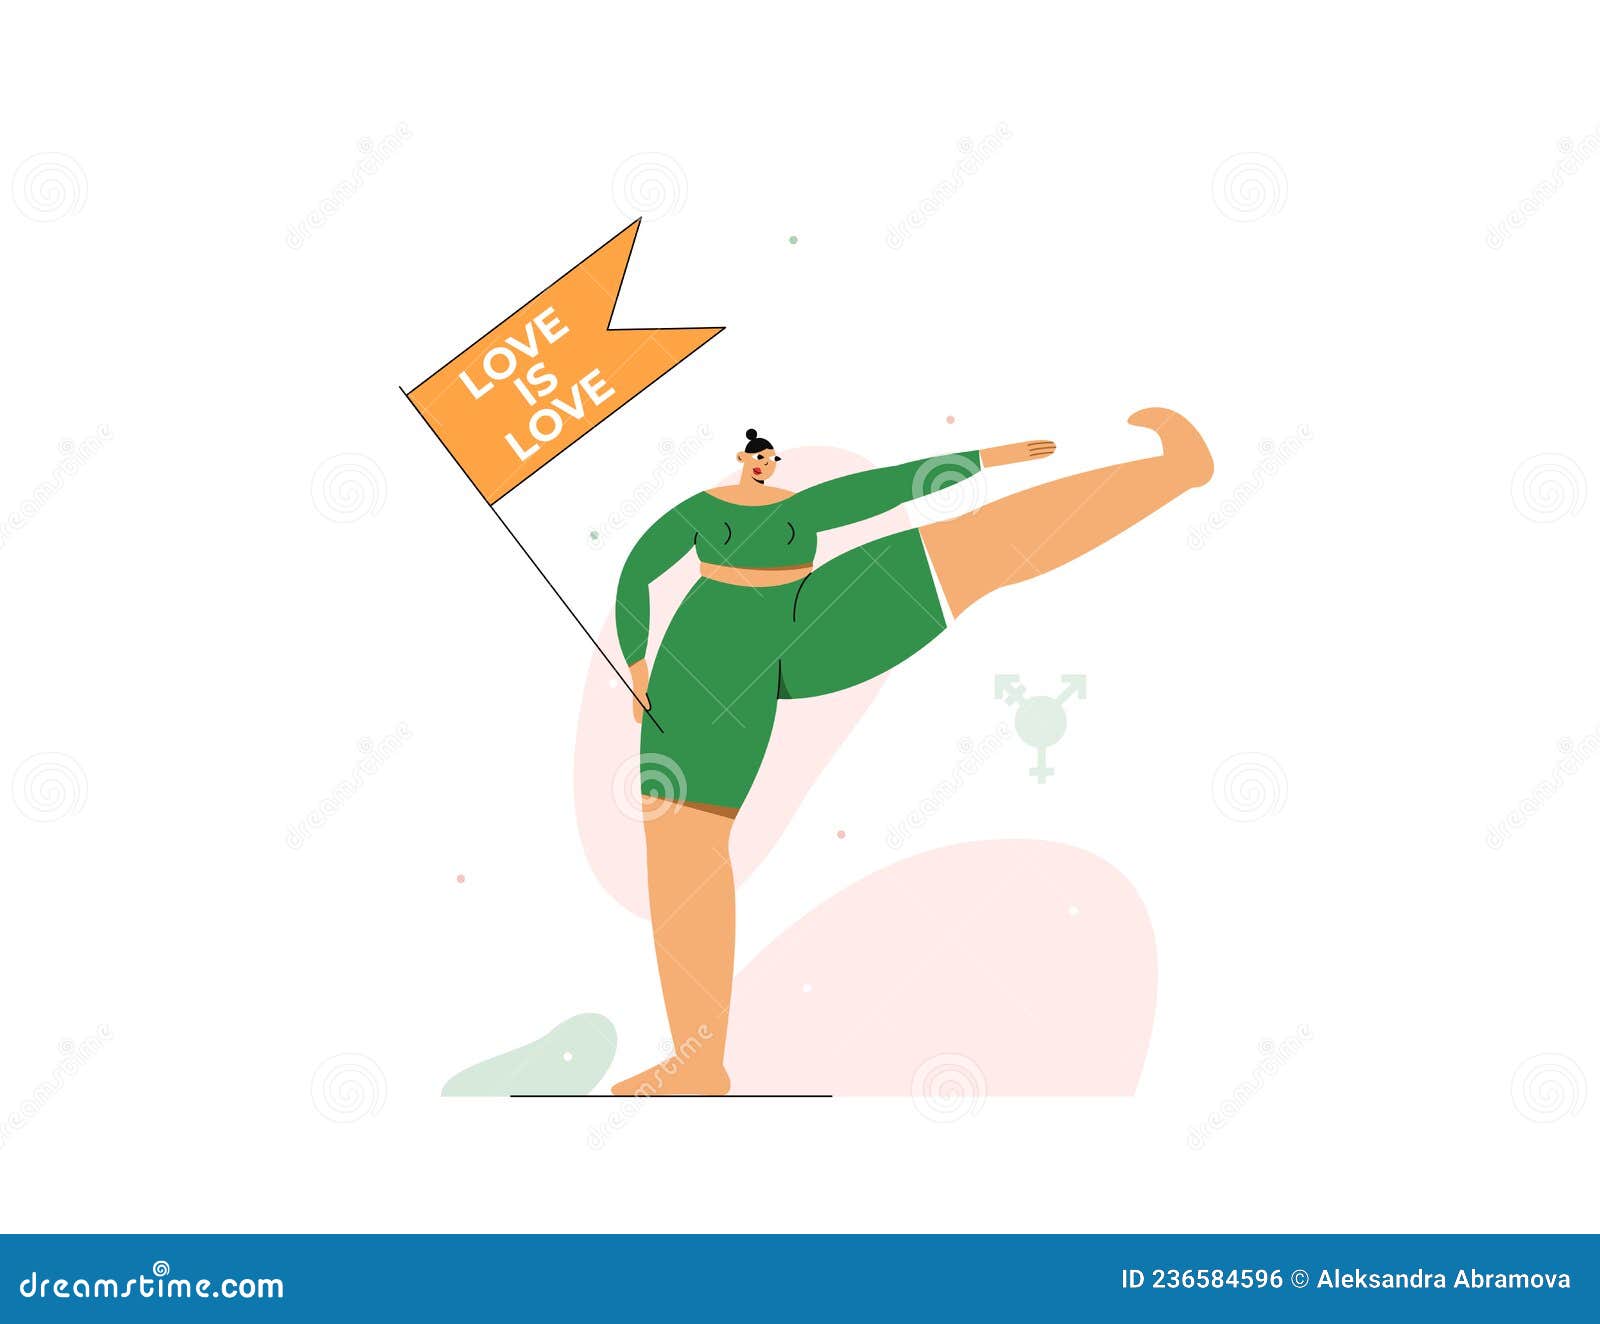 Yoga Pose: Extended Hand-to-Big-Toe Pose Variation |YogaClassPlan.com